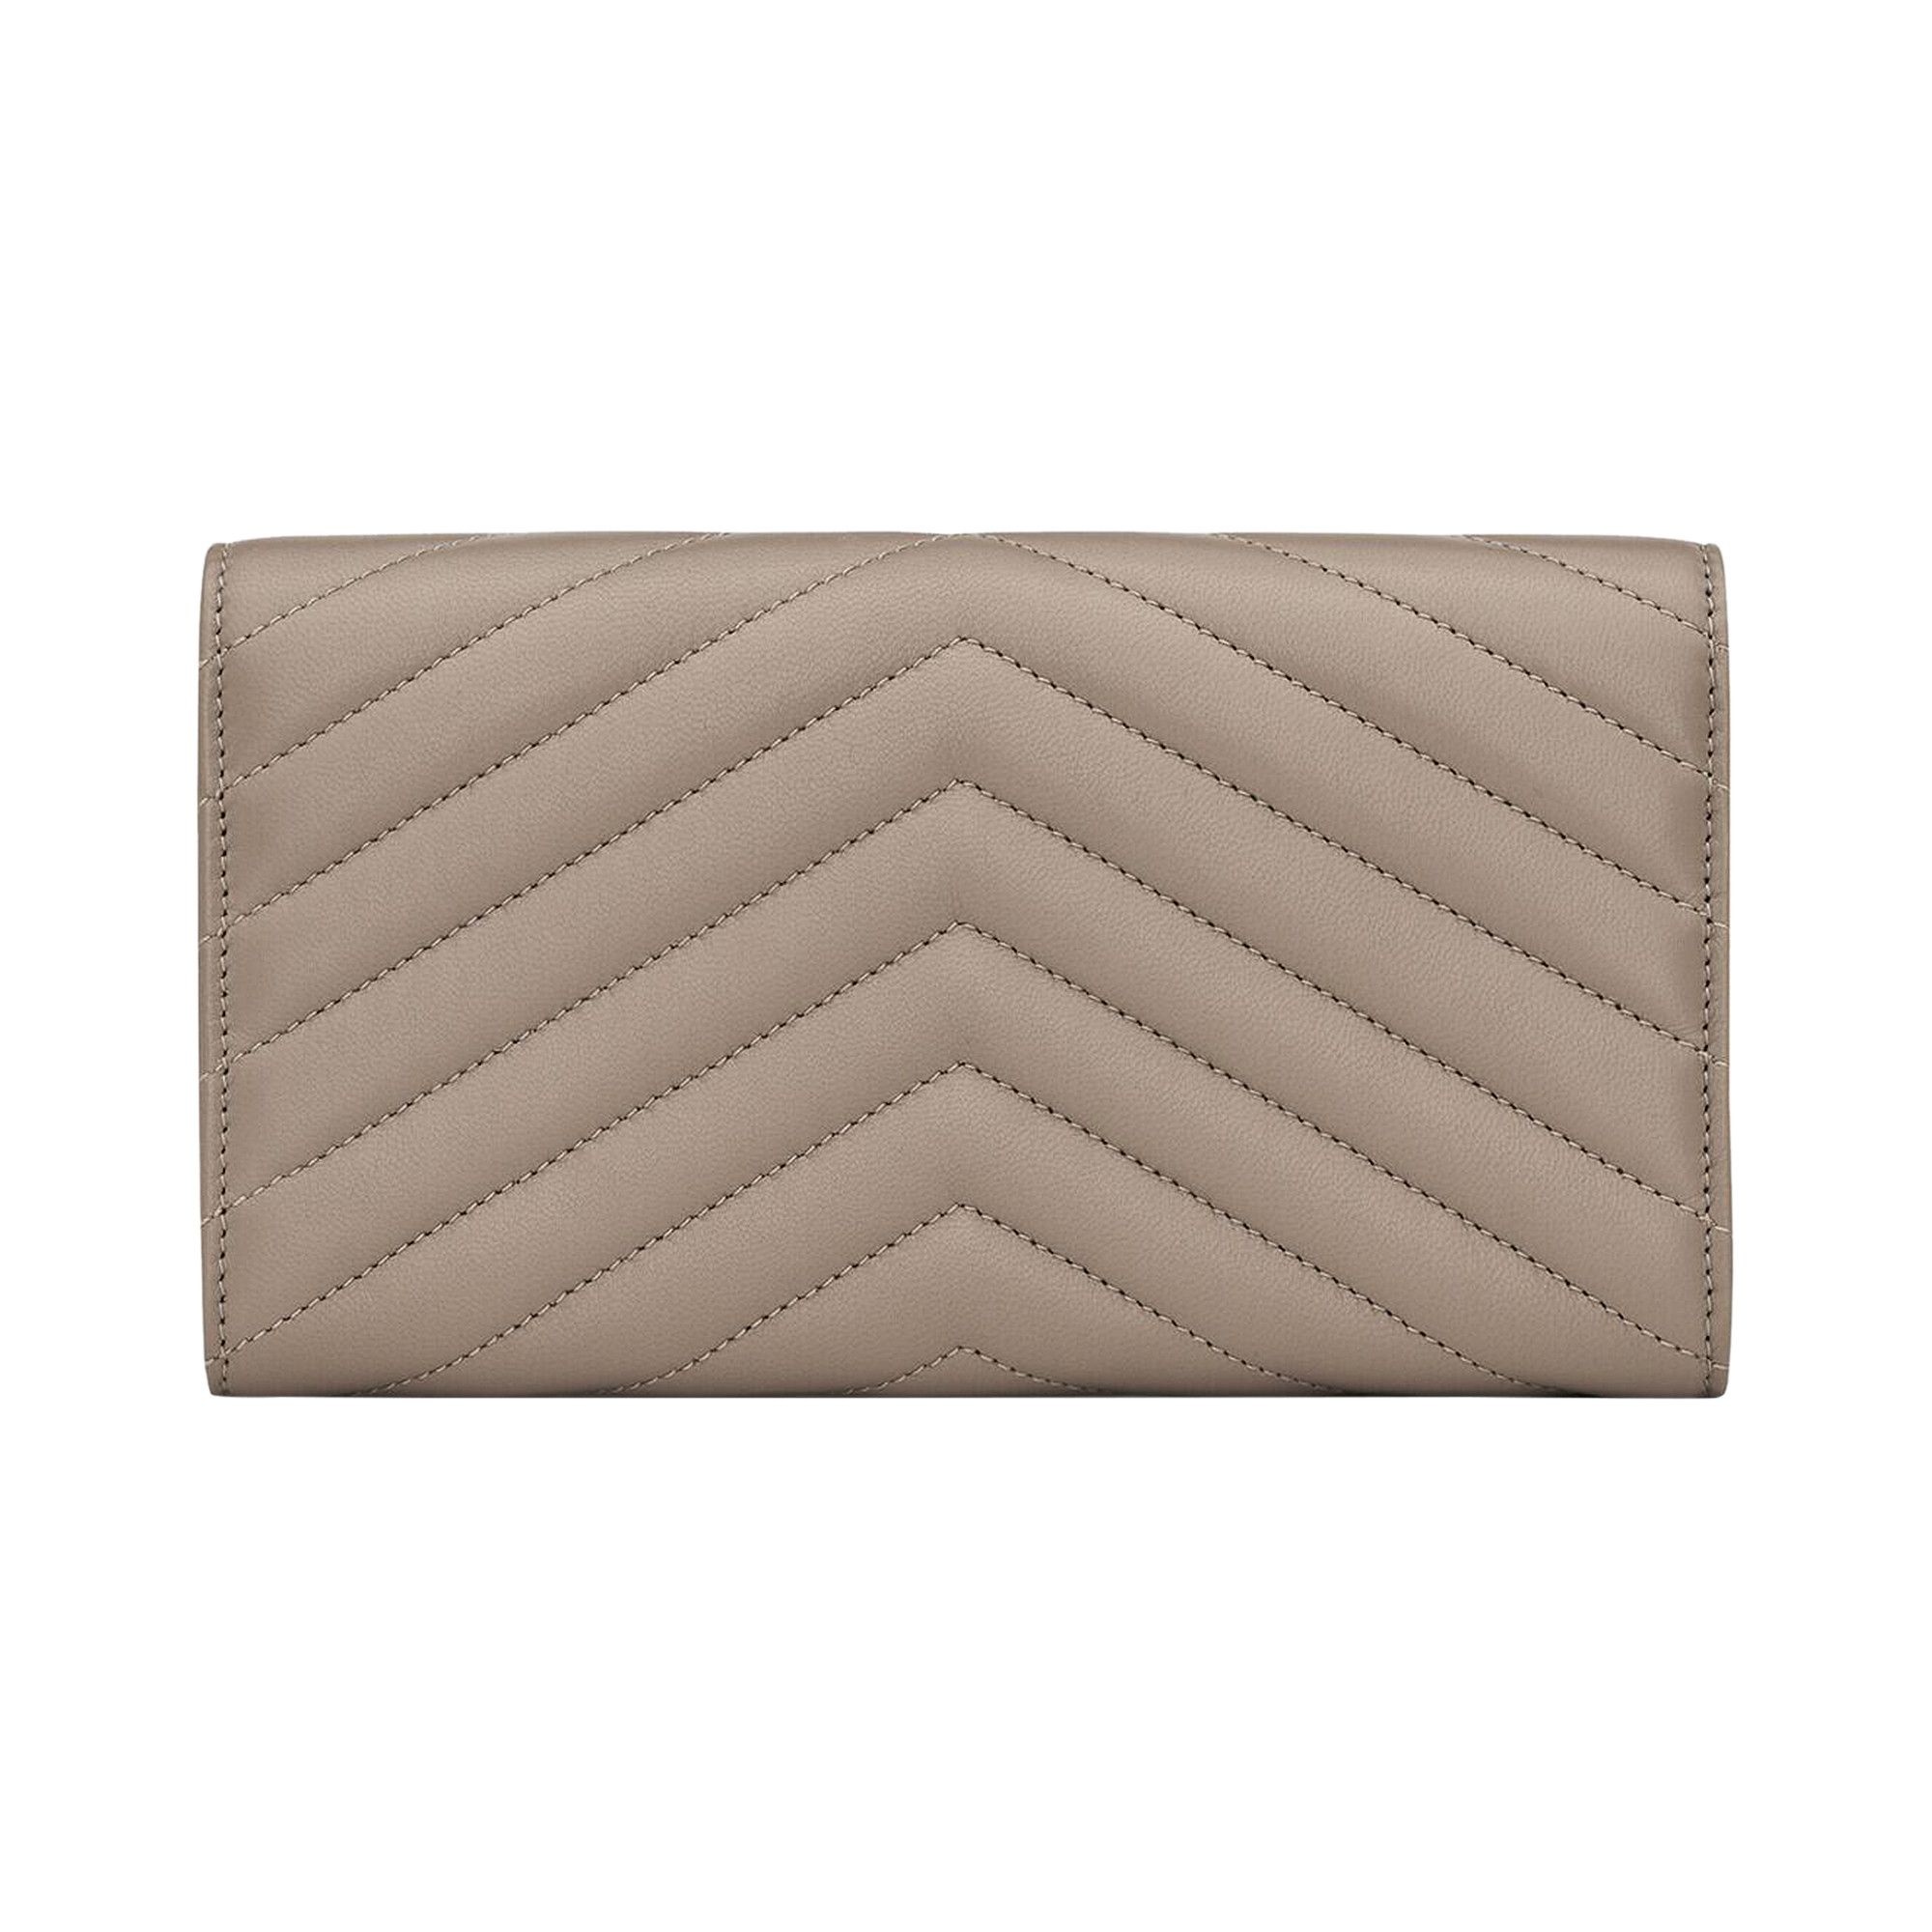 Saint Laurent Large Flap Wallet 'Greyish Brown' - 2